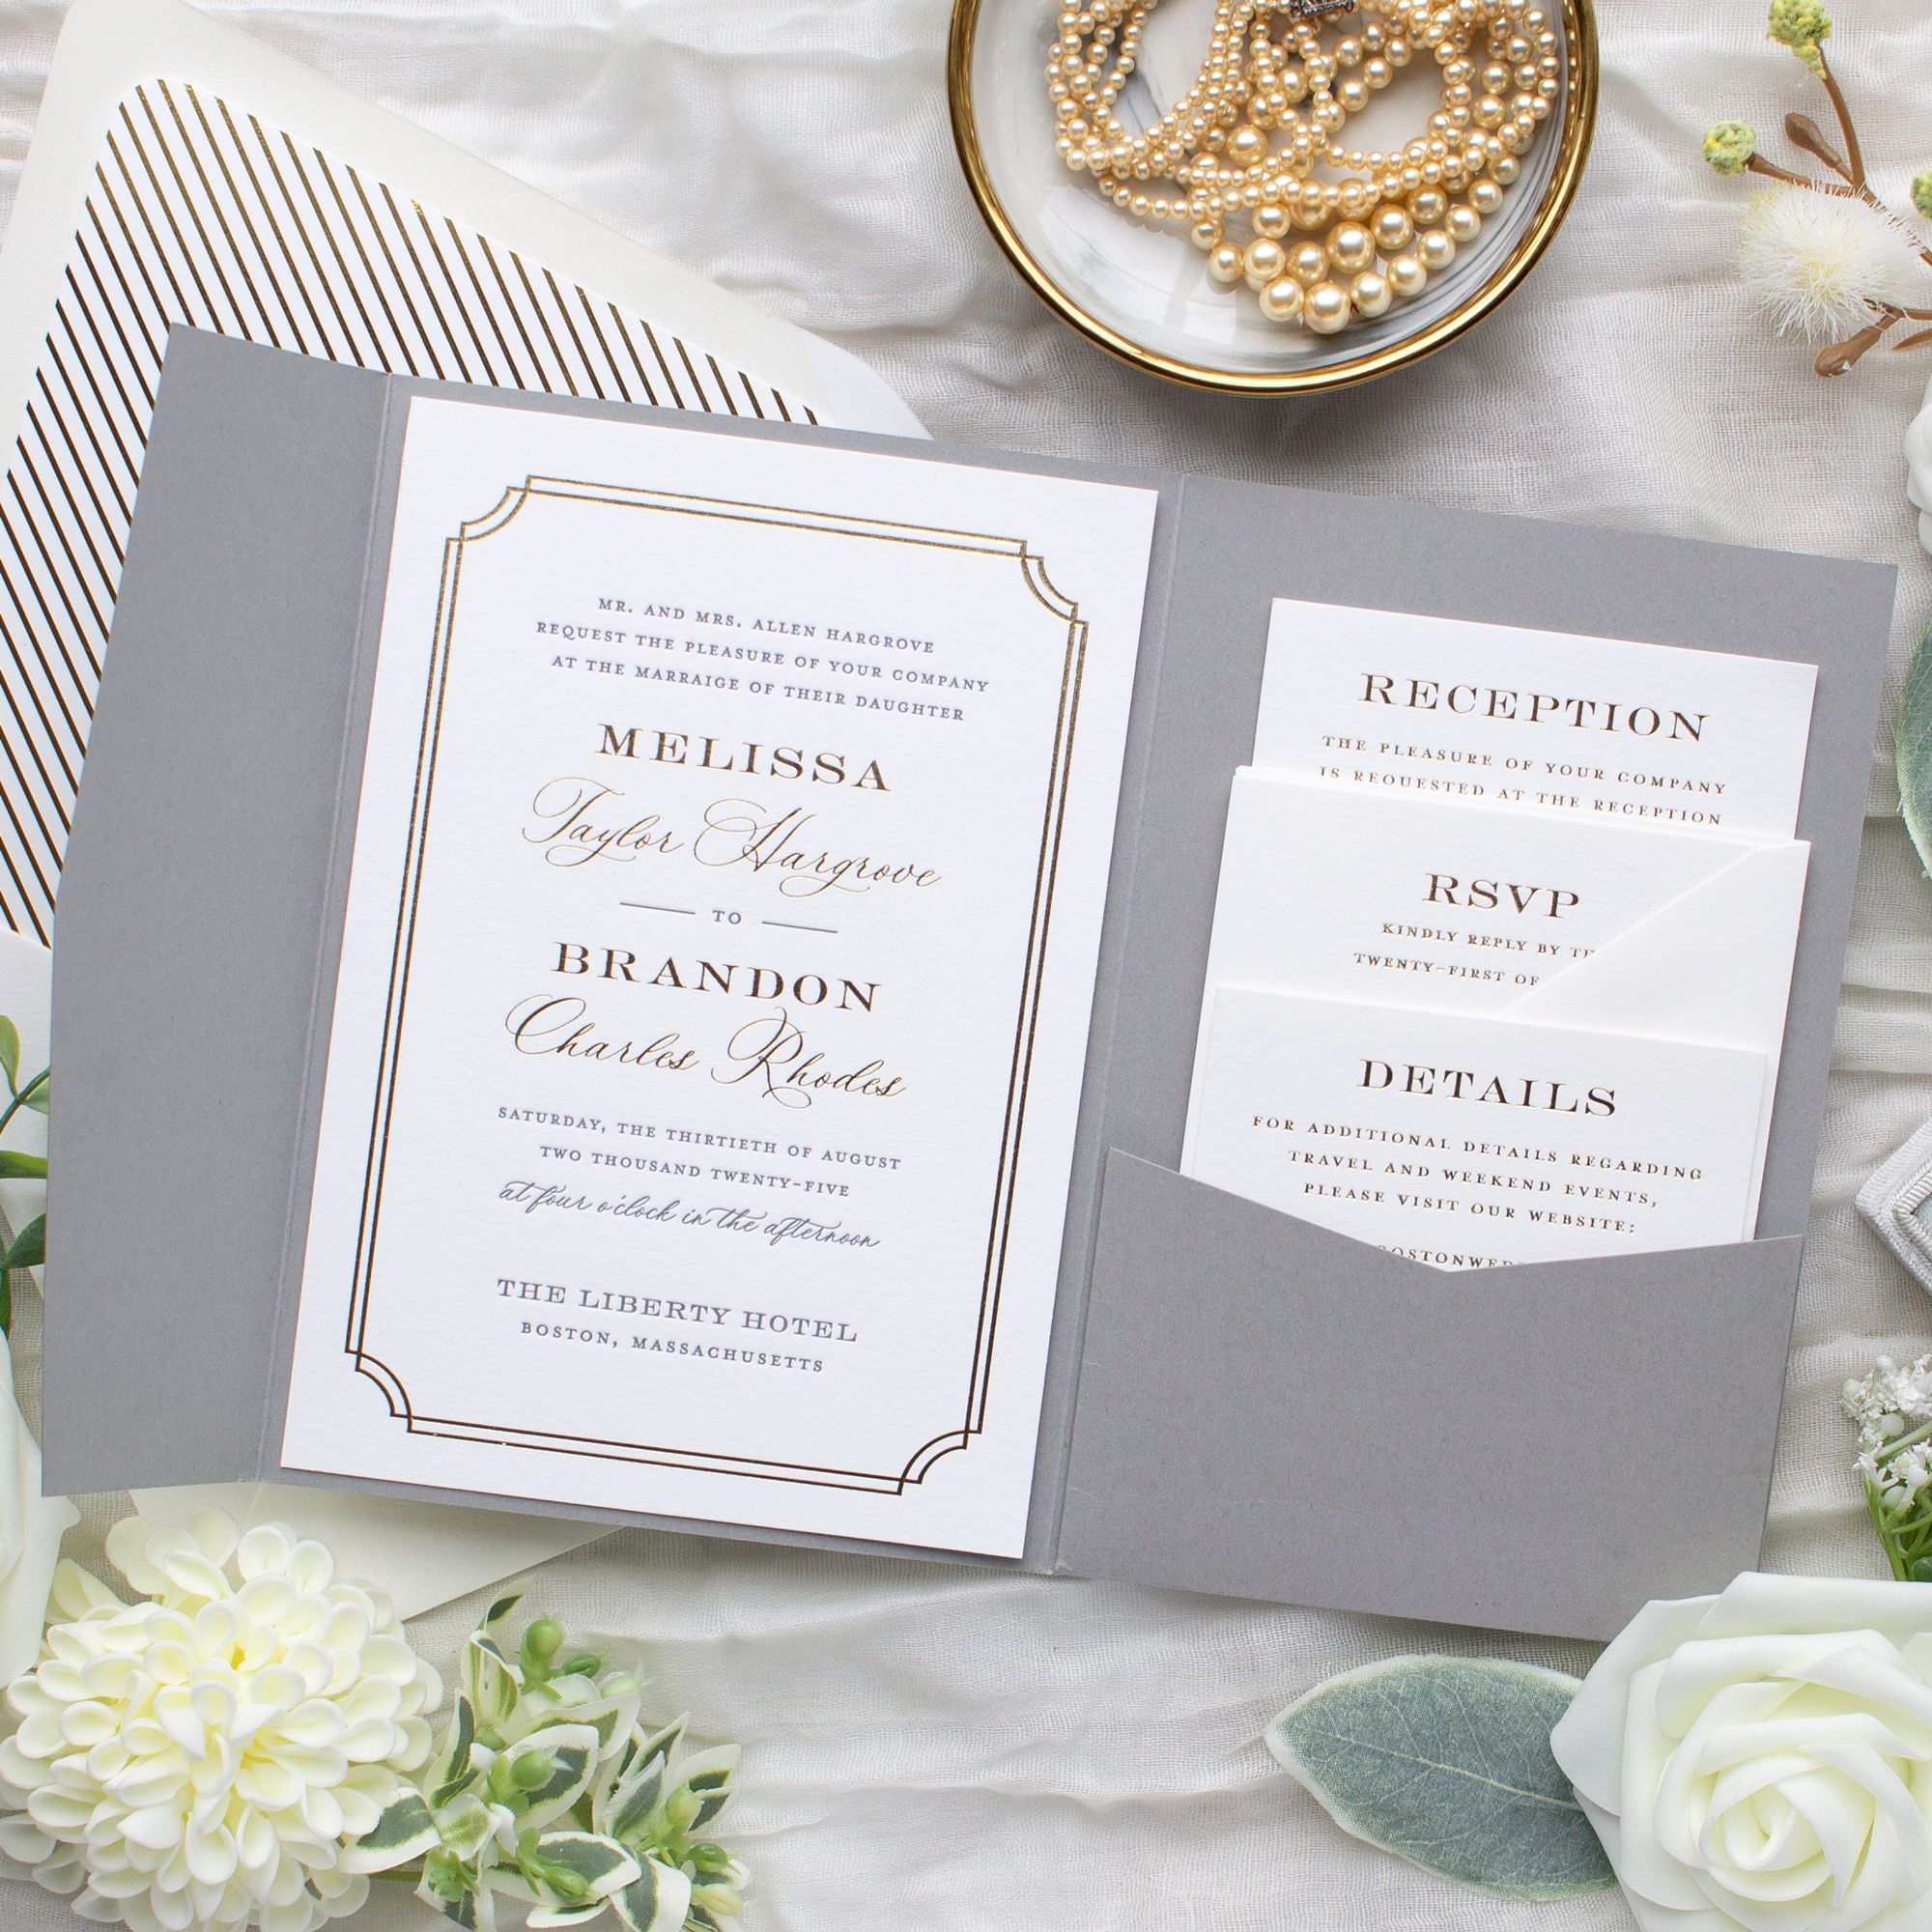 pocketfolder wedding invitations